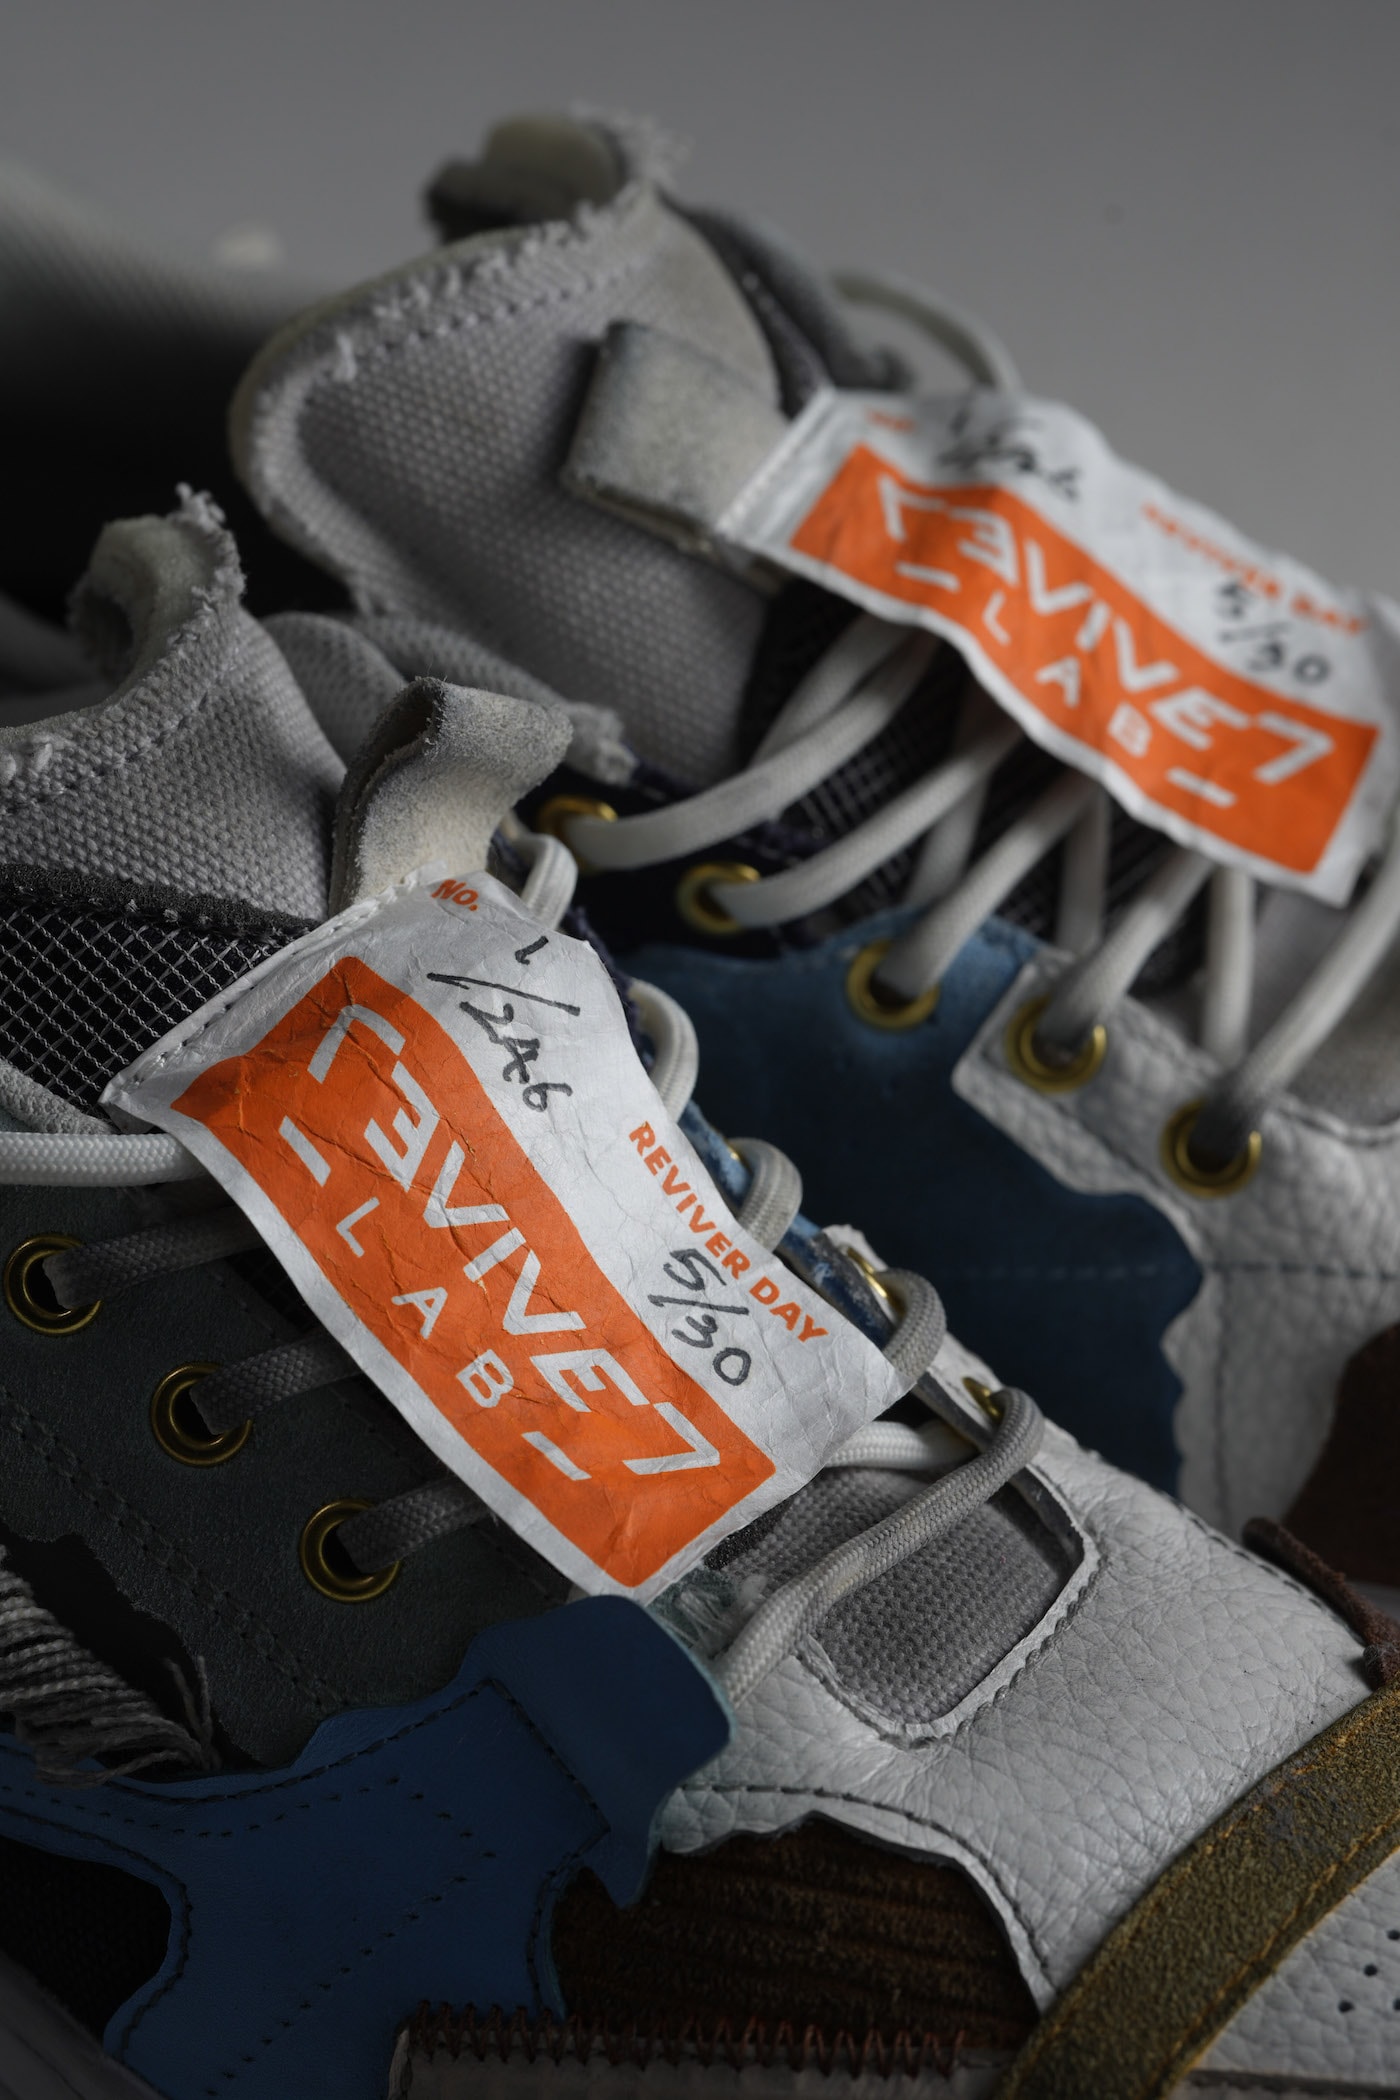 REVIVER LAB 推出全新解构鞋款系列